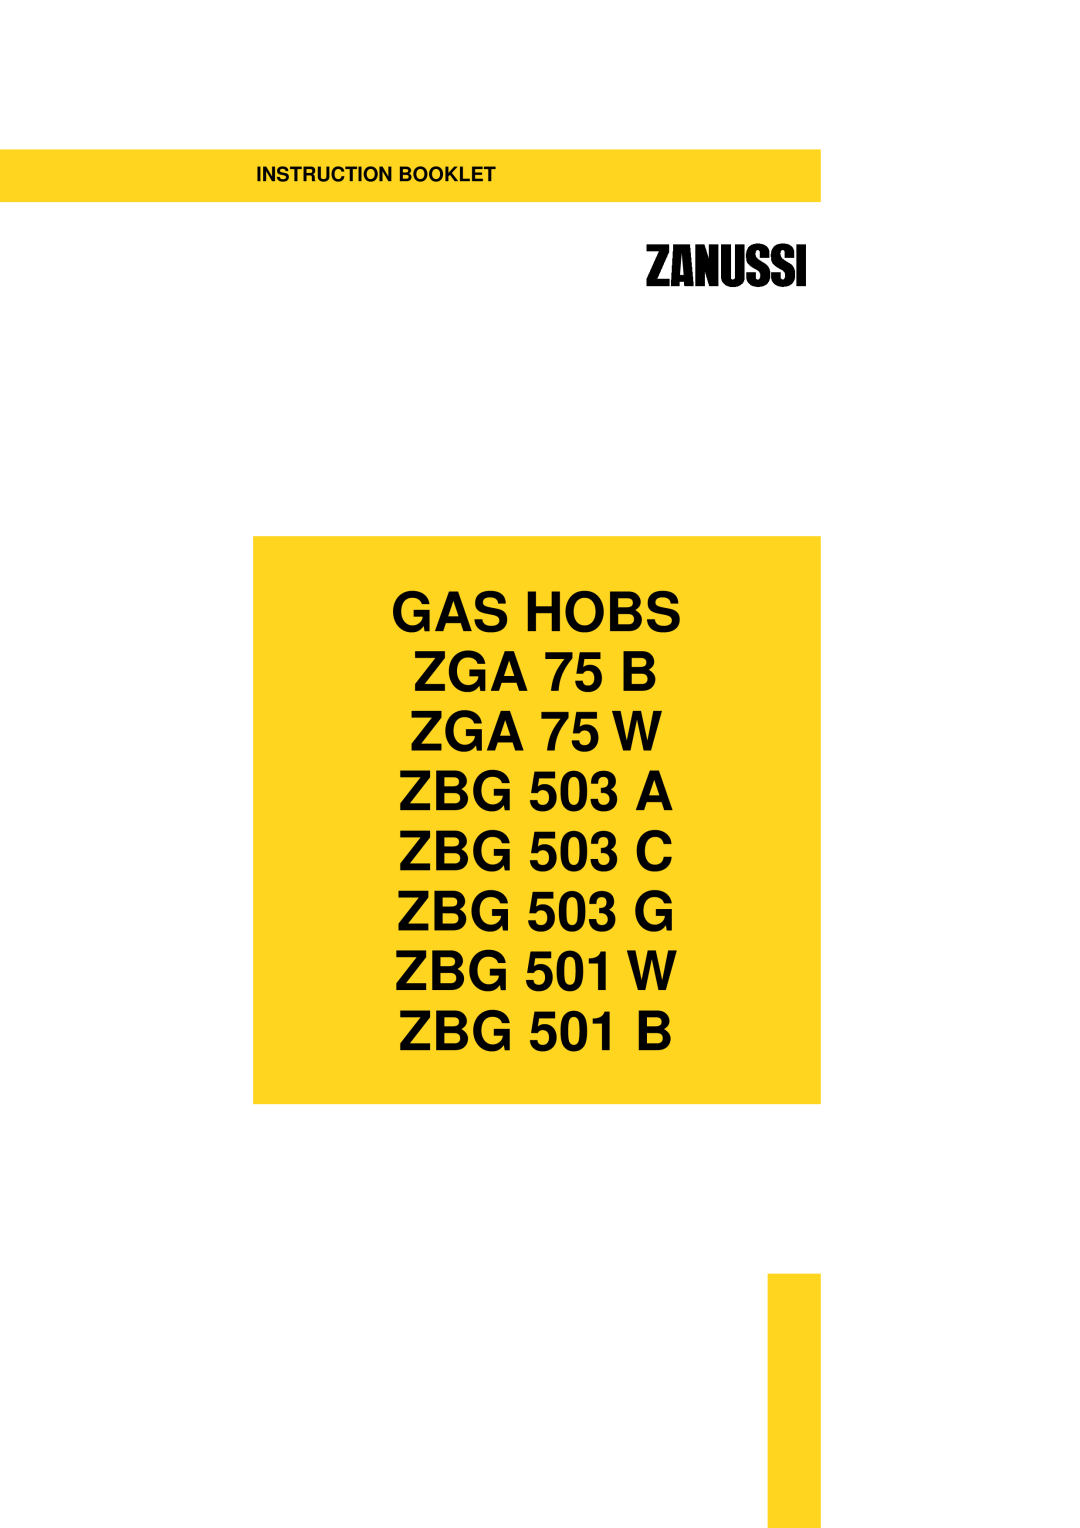 Zanussi manual GAS HOBS ZGA 75 B ZGA 75 W ZBG 503 A ZBG 503 C, ZBG 503 G ZBG 501 W ZBG 501 B, Instruction Booklet 